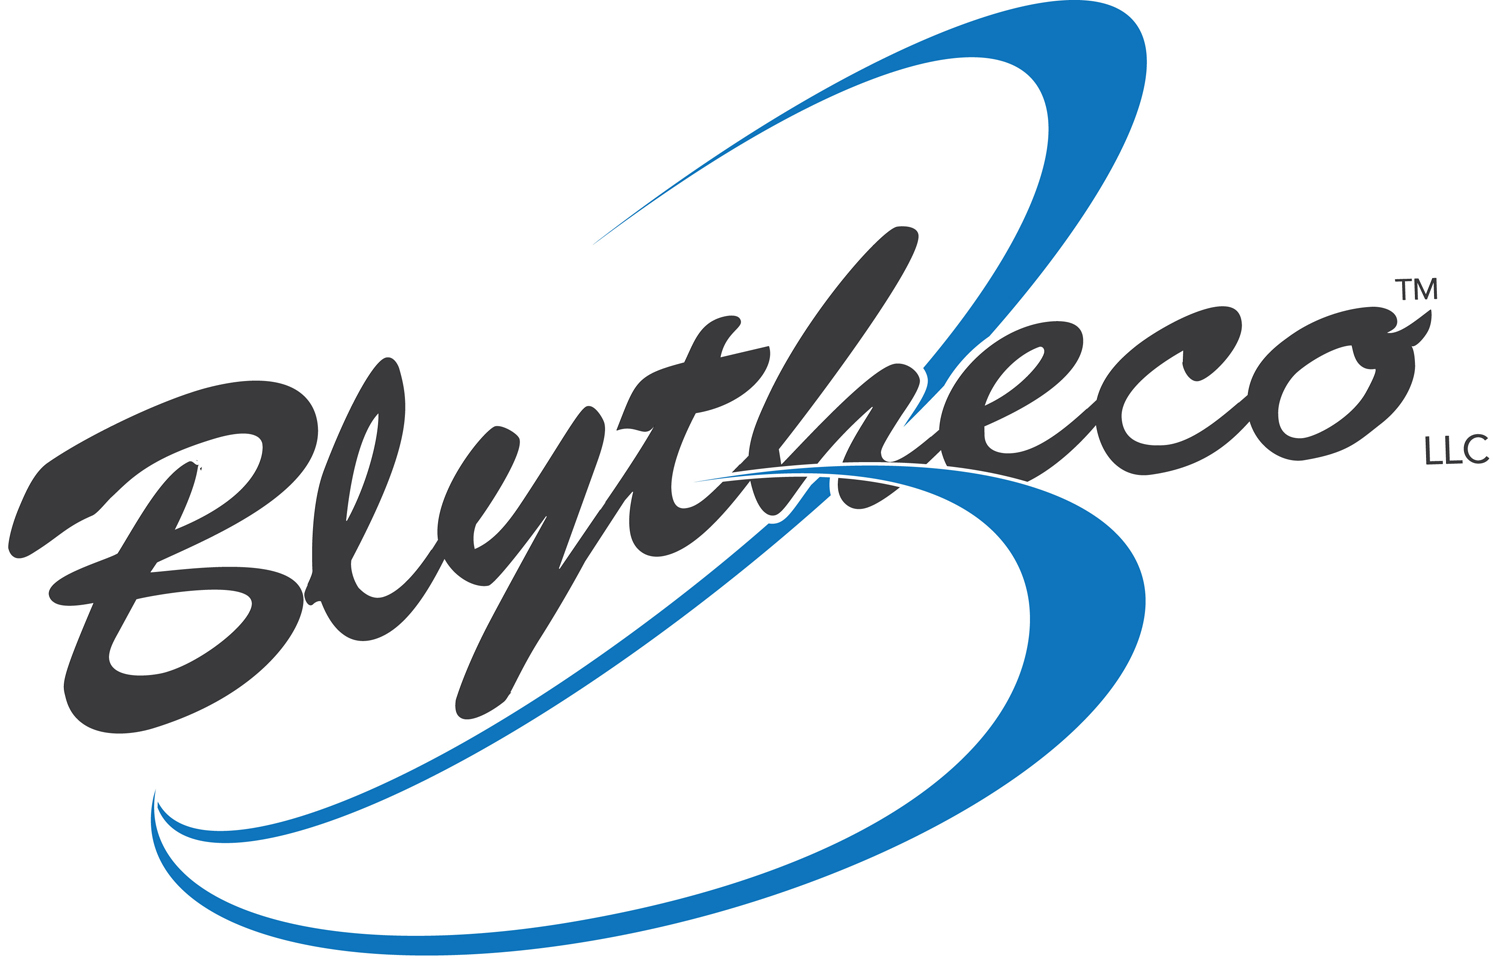 Blytheco Sierra partner